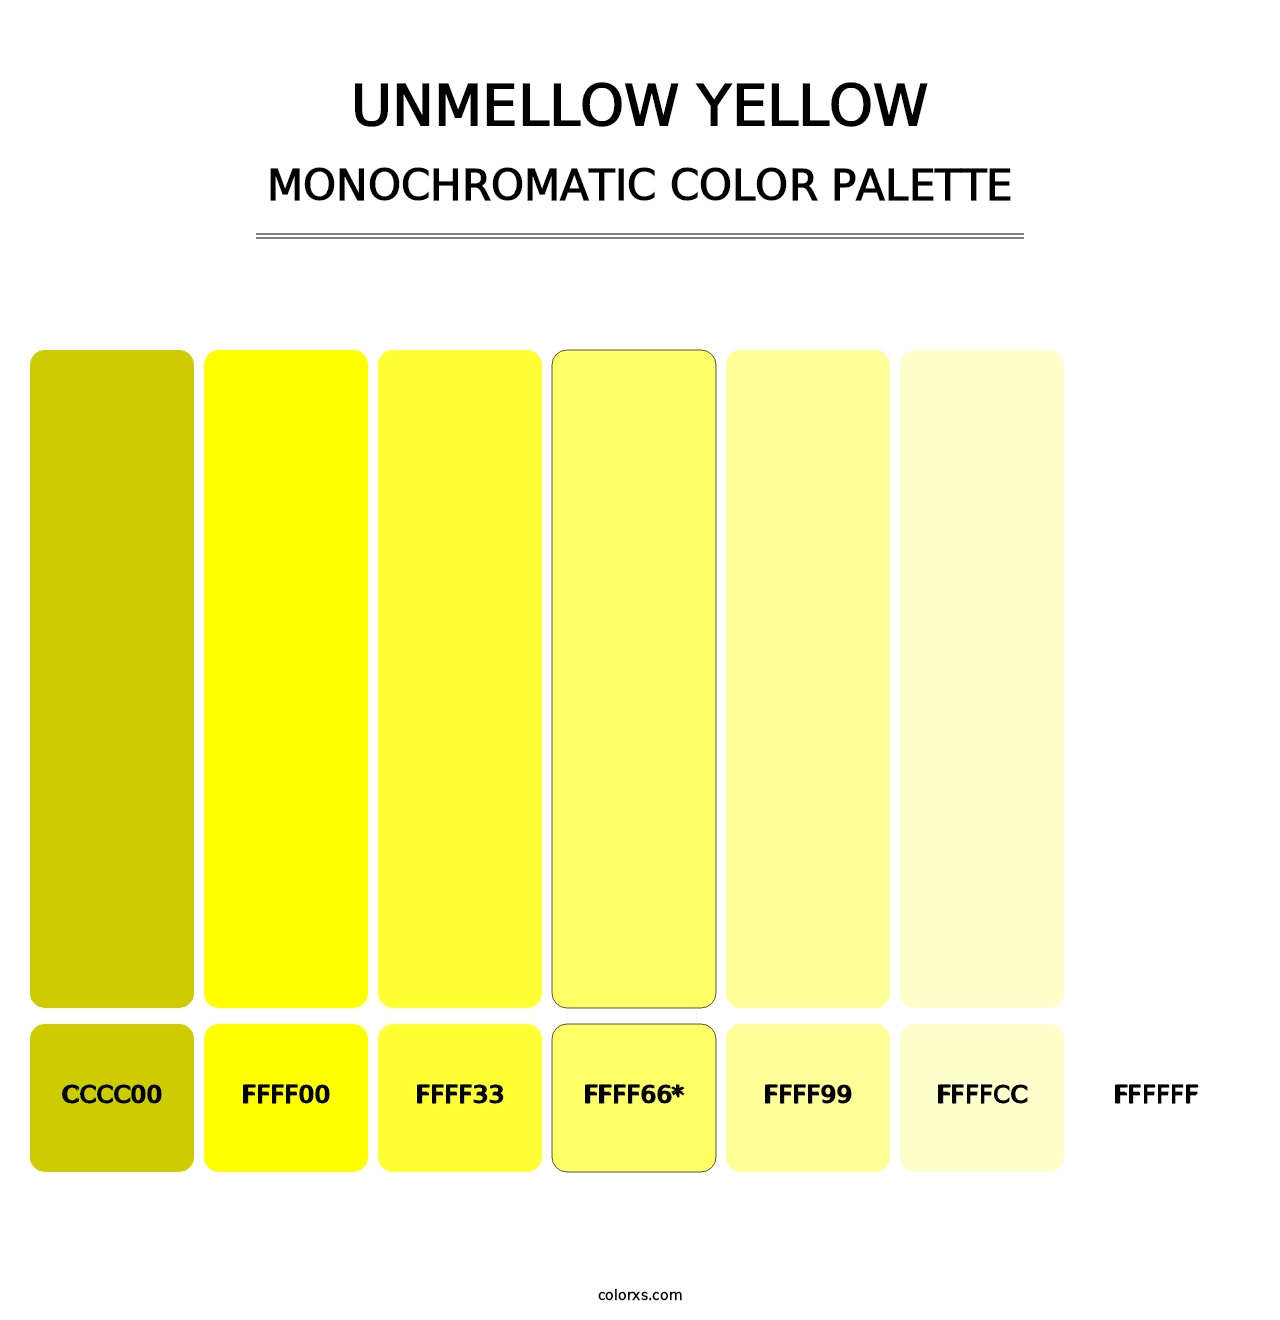 Unmellow Yellow - Monochromatic Color Palette